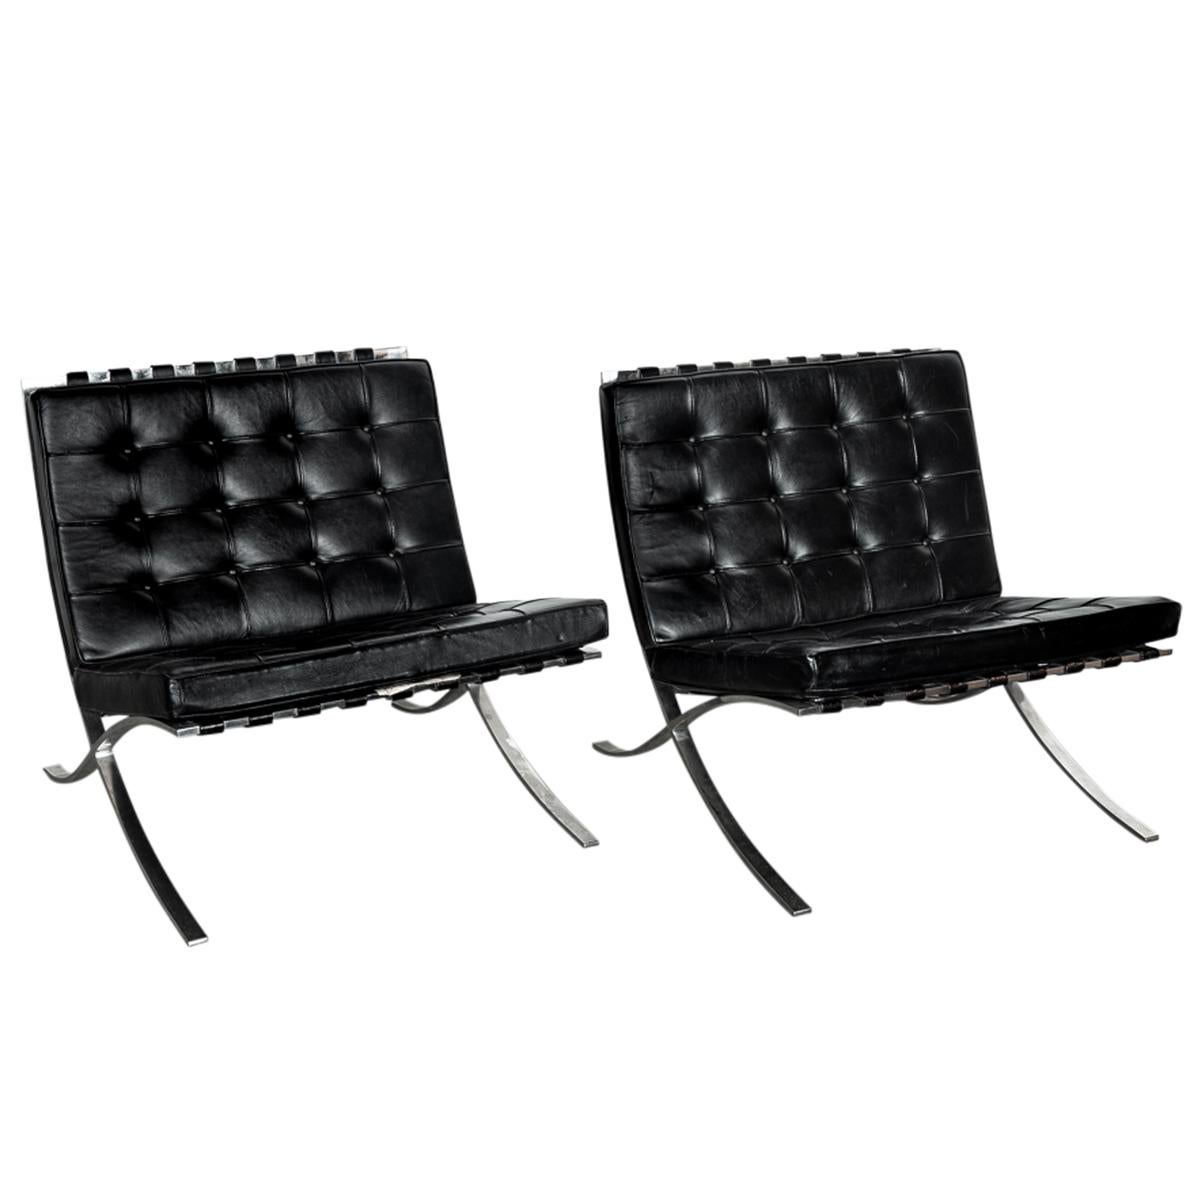 Frühes Paar MCM Knoll Barcelona-Stühle, Mies van der Rohe 1961, schwarzes Leder (Bauhaus) im Angebot